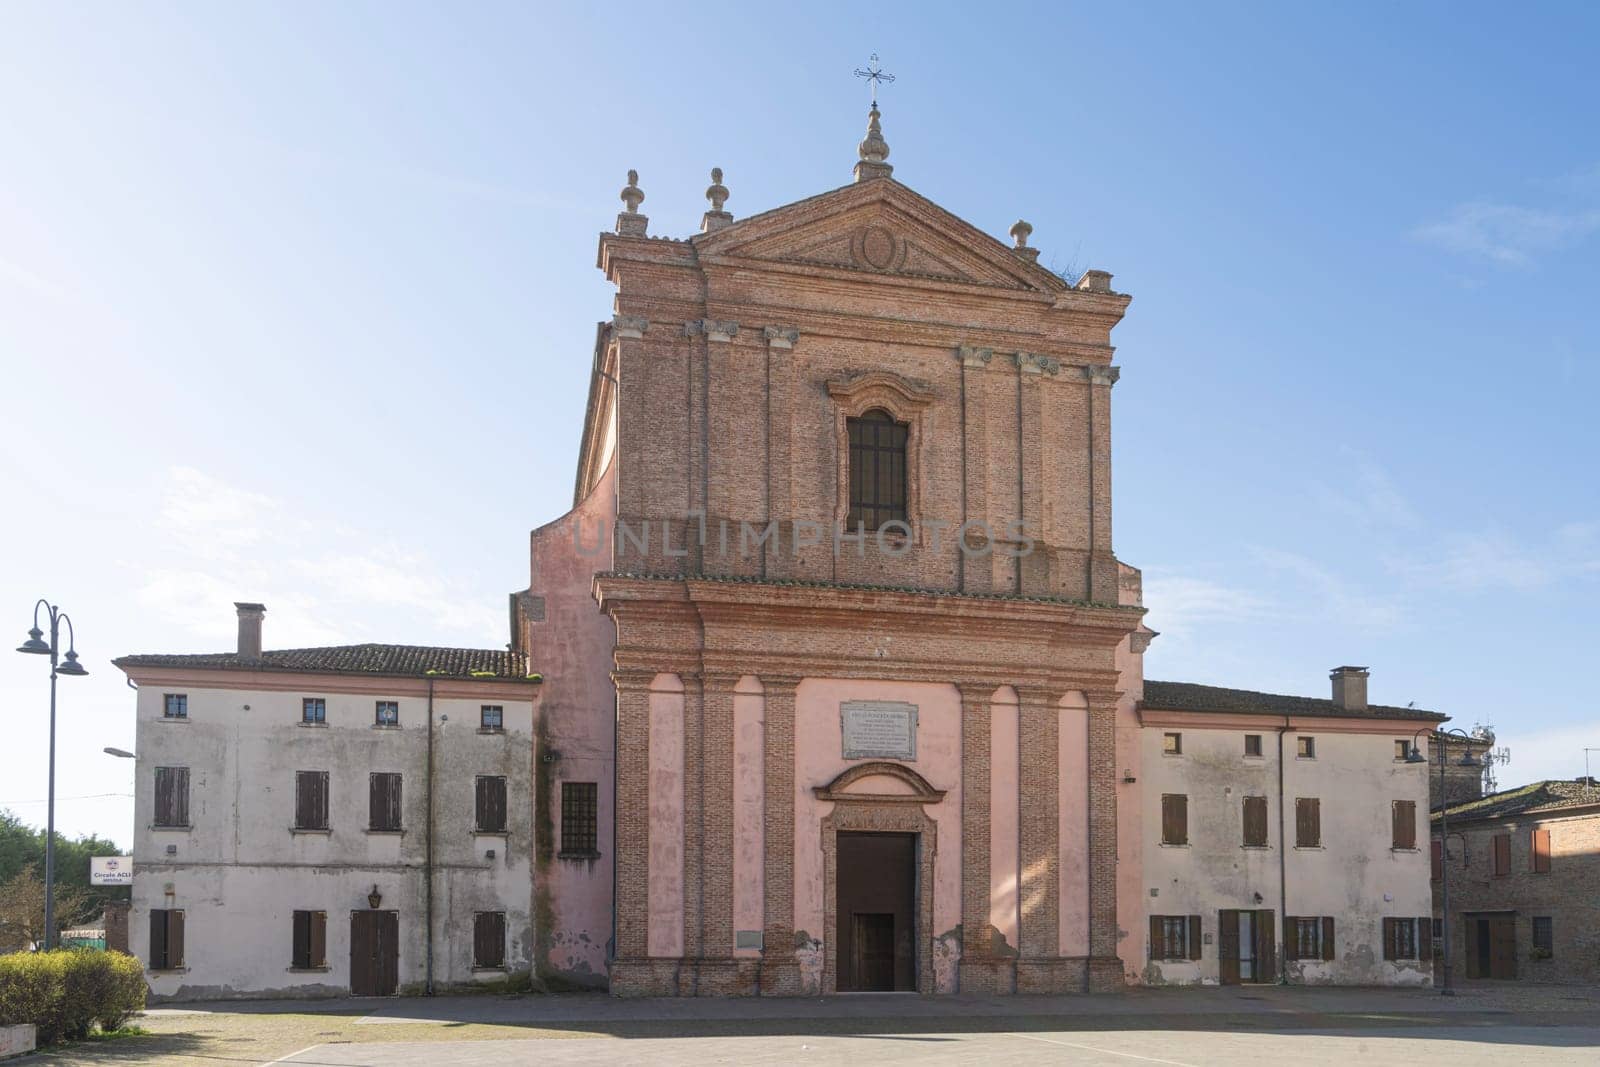 Church of the Nativity of Mary in Mesola, Italy by sergiodv